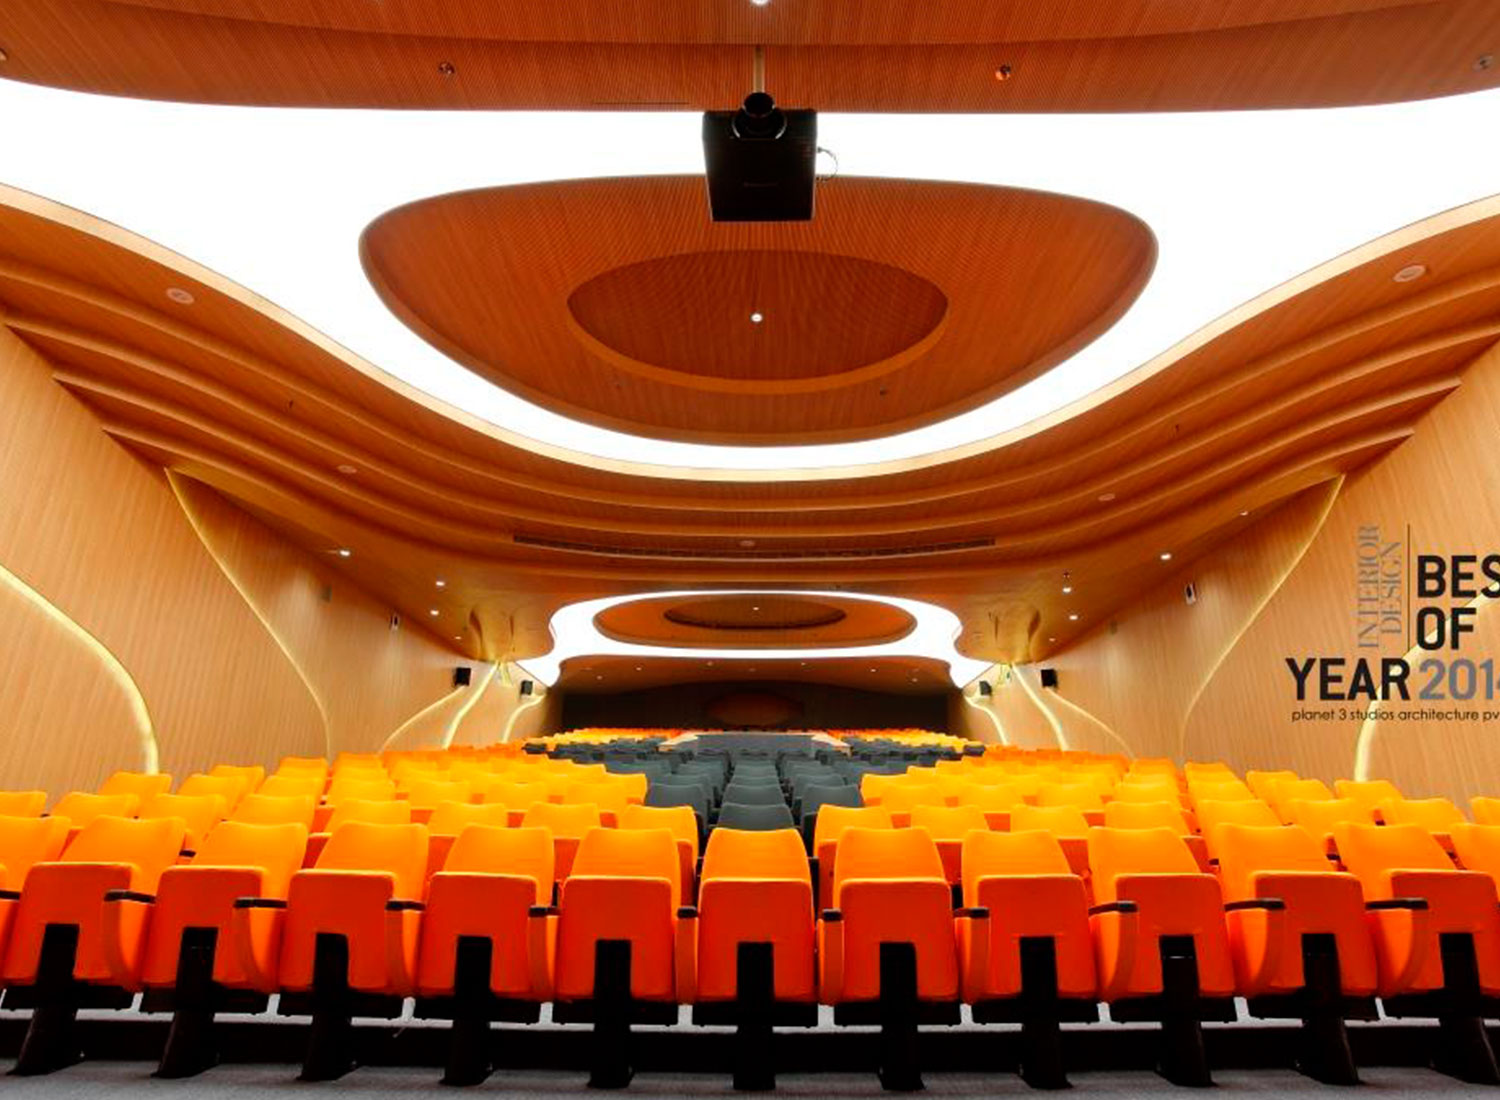 Vidyalankar - Stretch Ceiling Translucent with Backlighting in auditorium - Auditorium